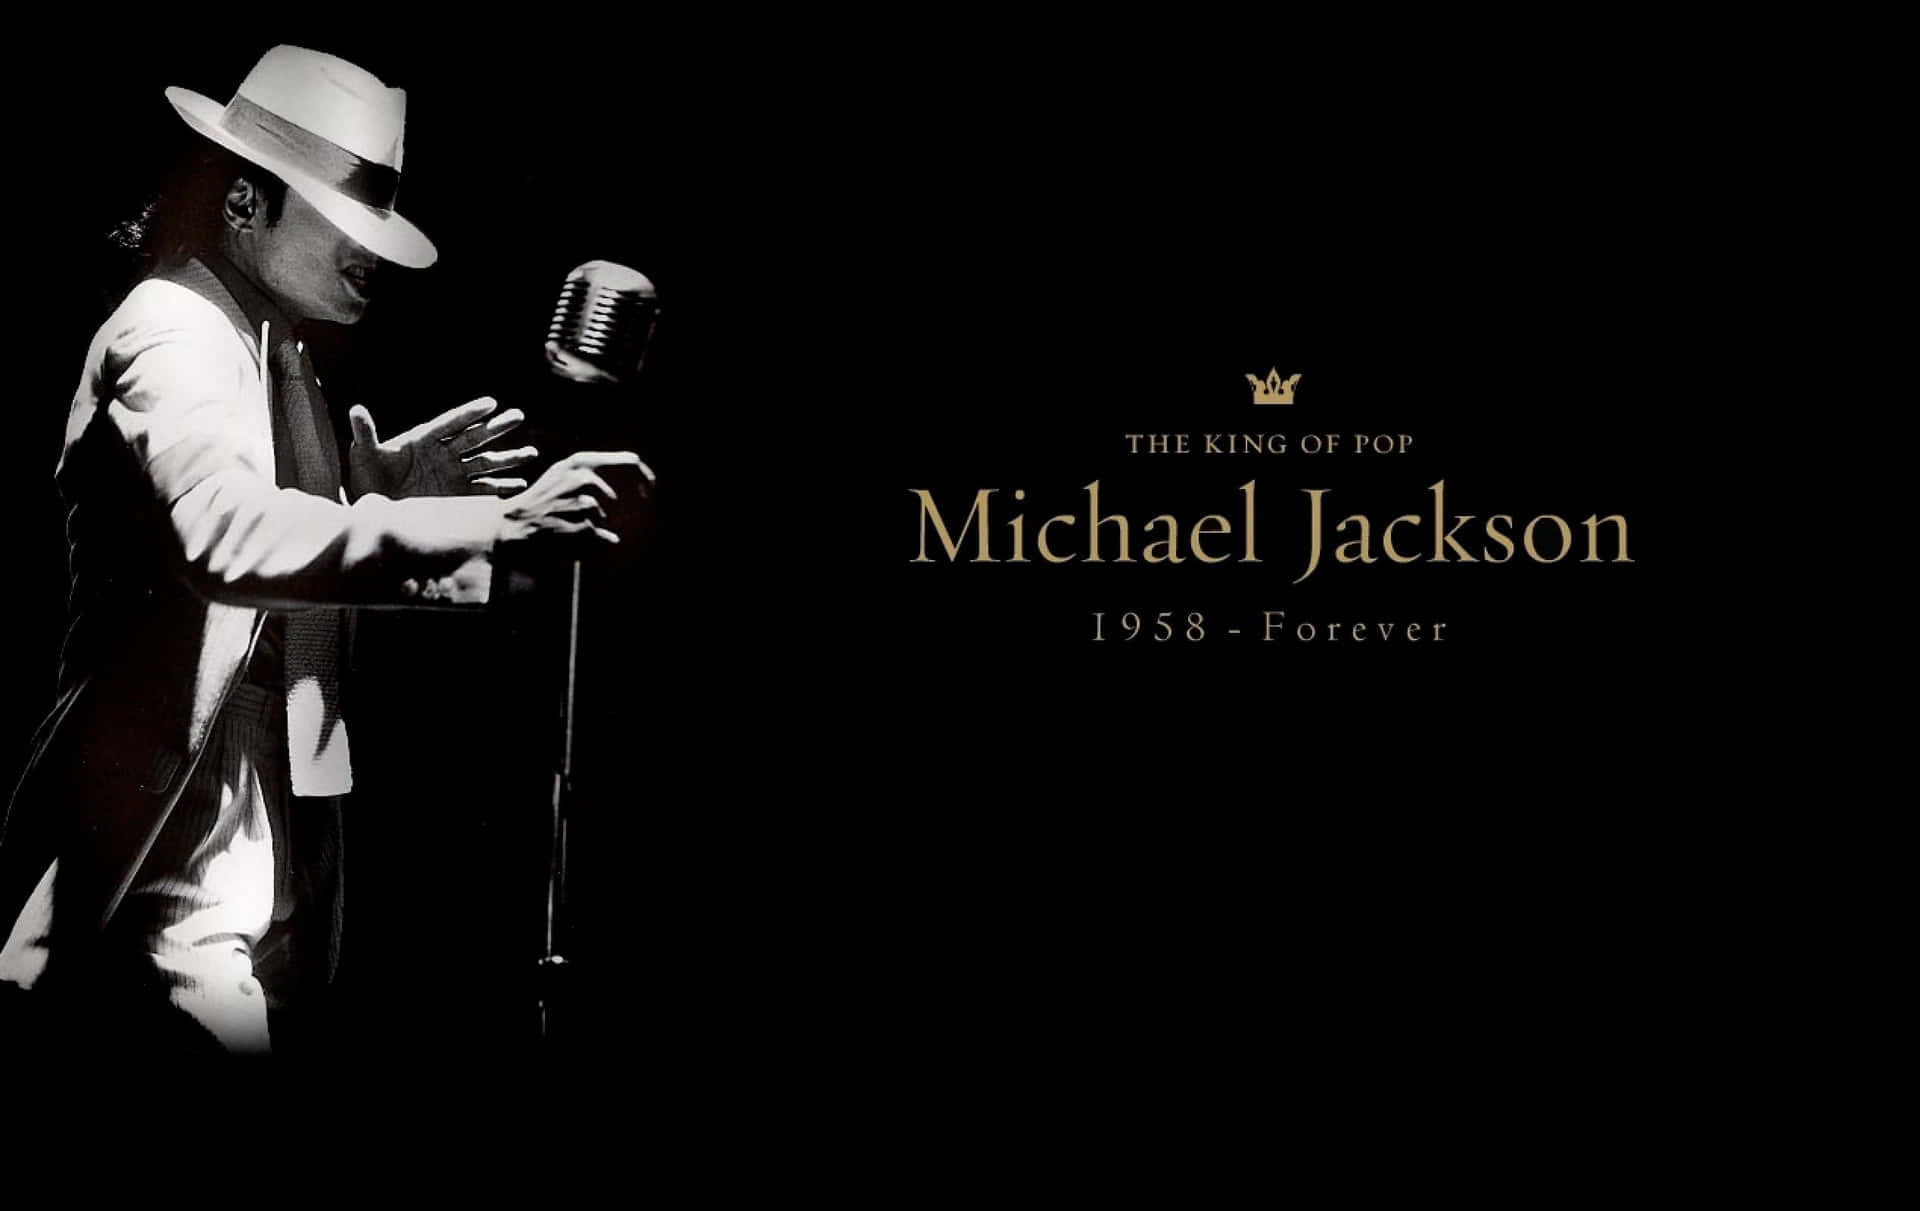 Michael Jackson strikes a pose on stage